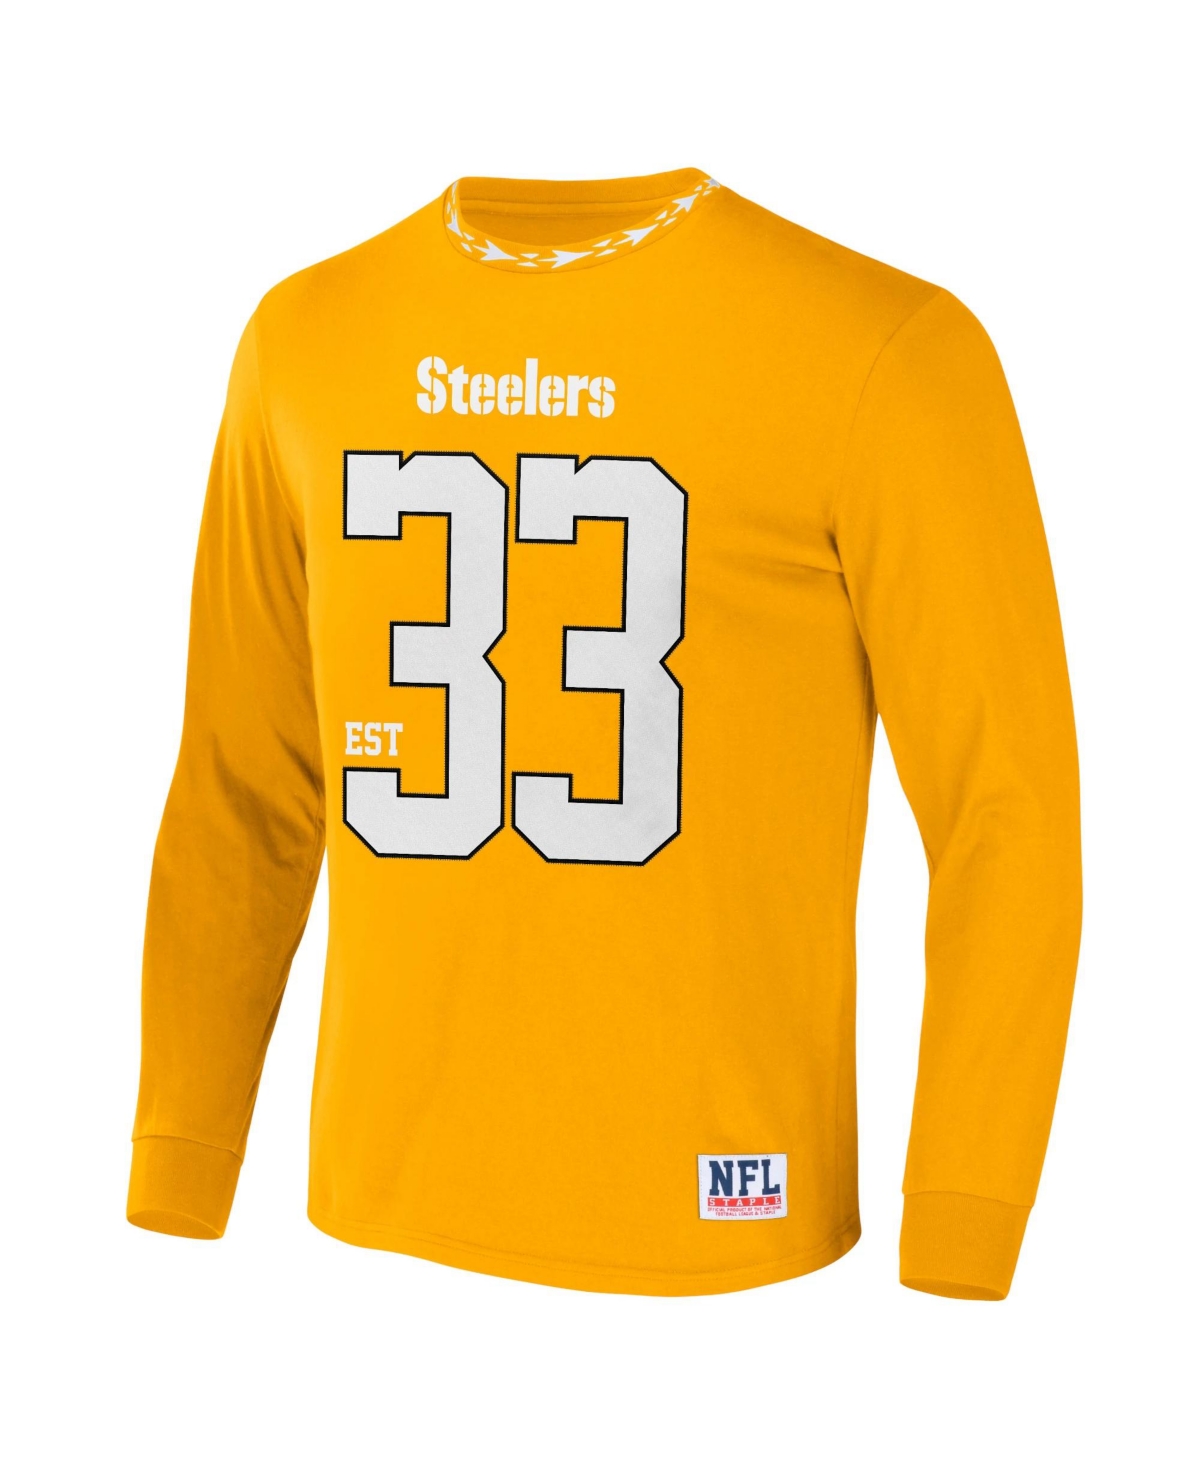 Shop Nfl Properties Men's Nfl X Staple Yellow Pittsburgh Steelers Core Long Sleeve Jersey Style T-shirt